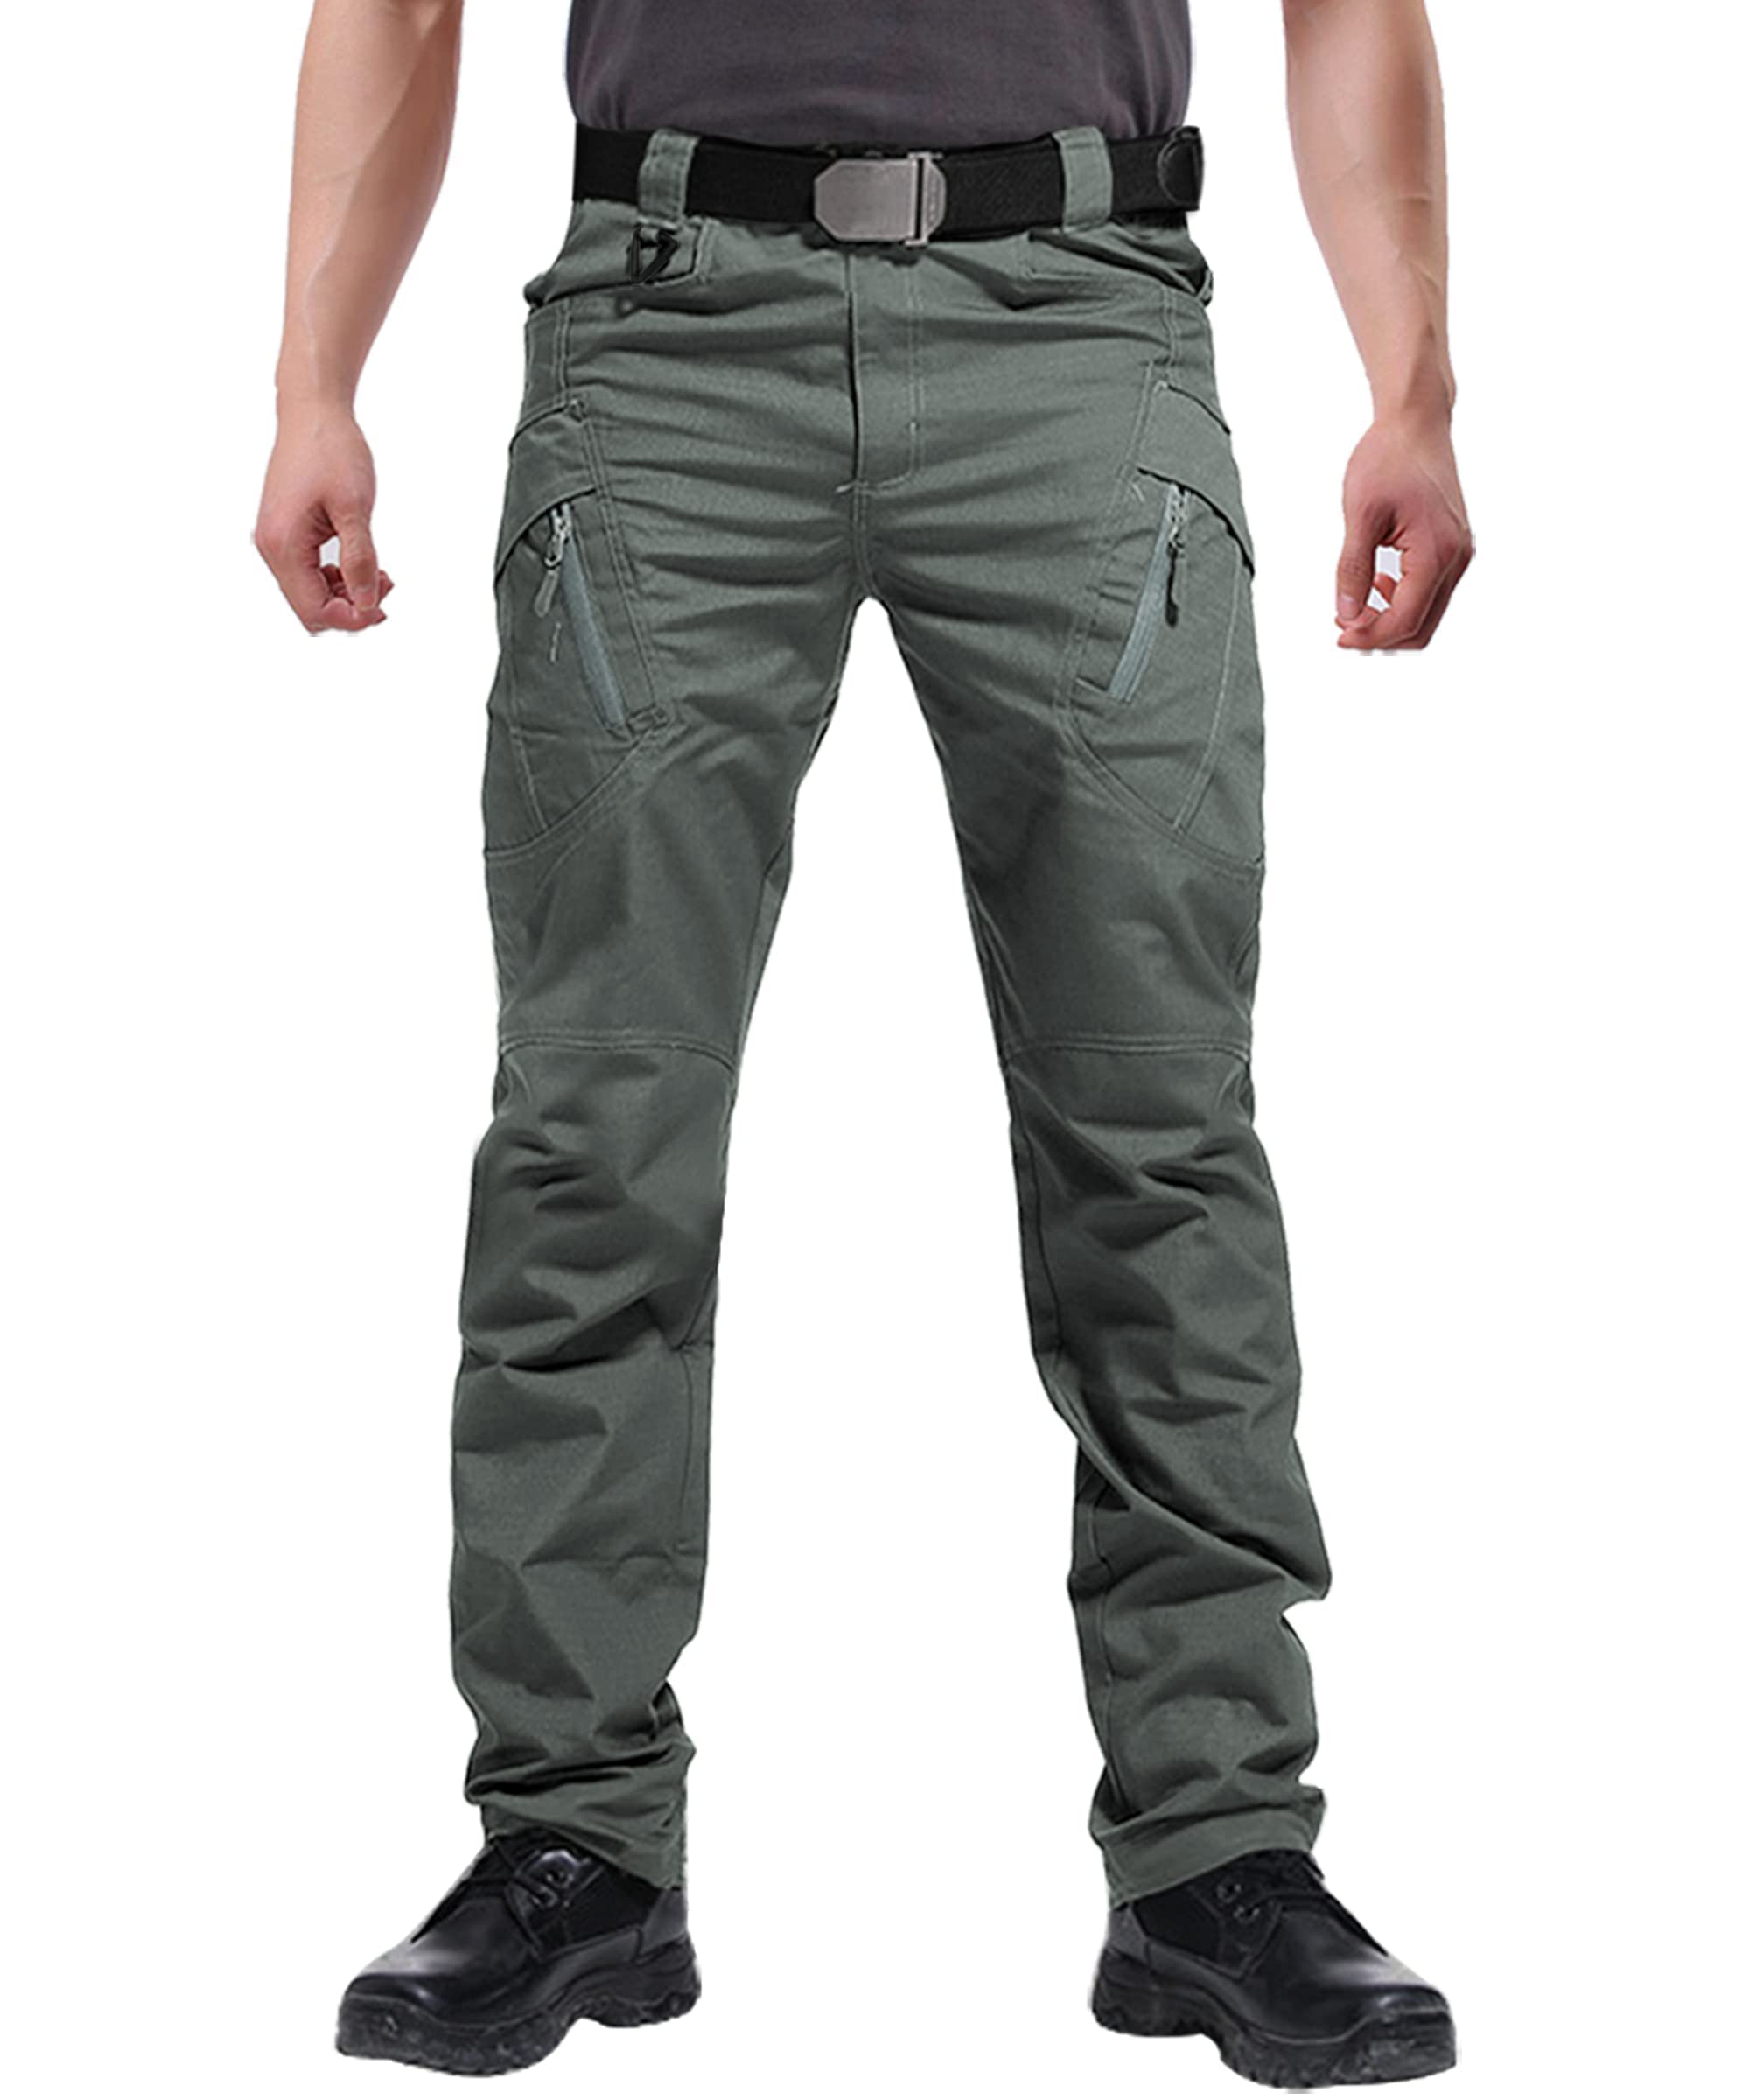 Royal PCS large pocket cargo pants | Streetwear men outfits, Street style  outfits men, Cargo pants outfit men